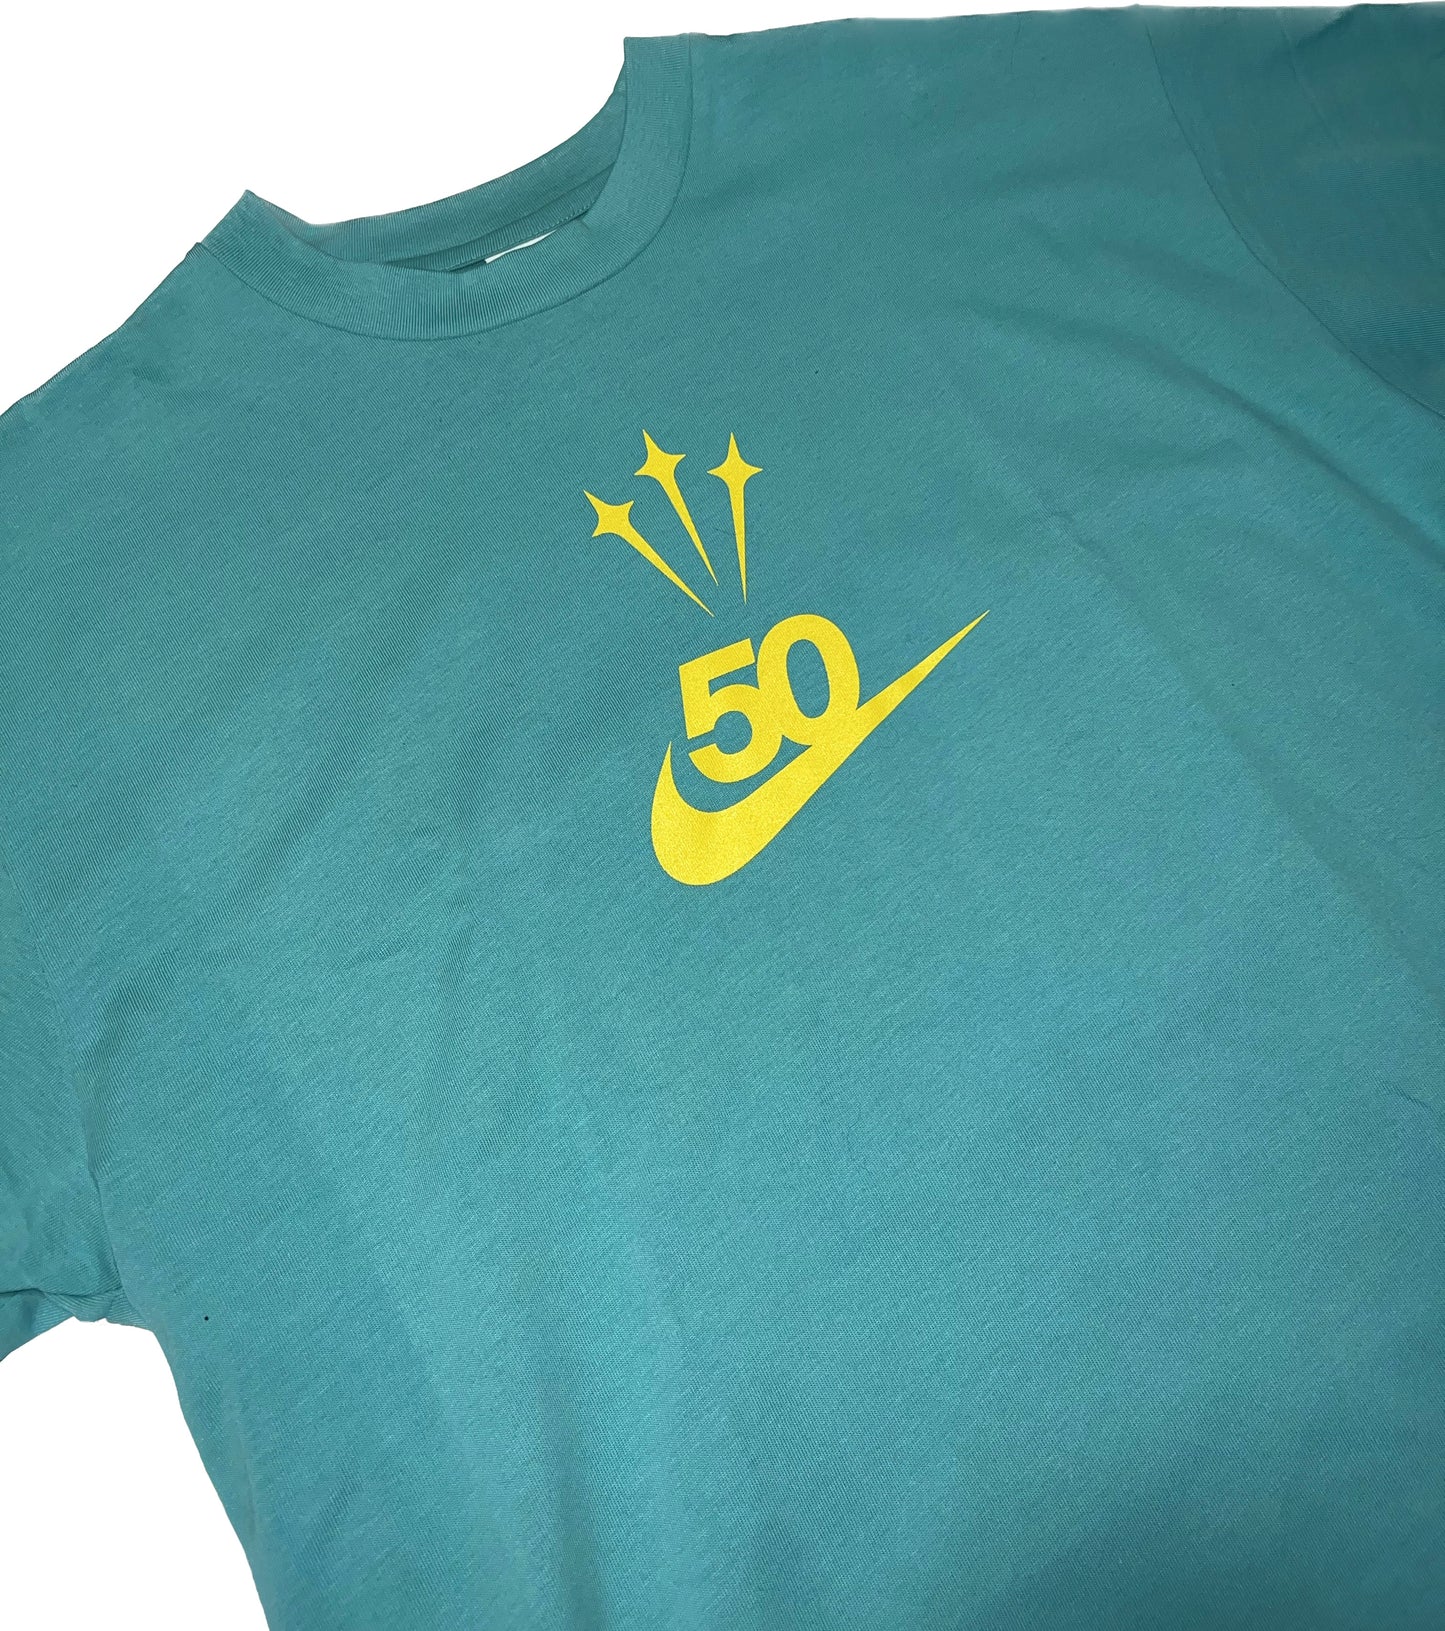 NOCTA x Nike 50th Anniversary T-shirt